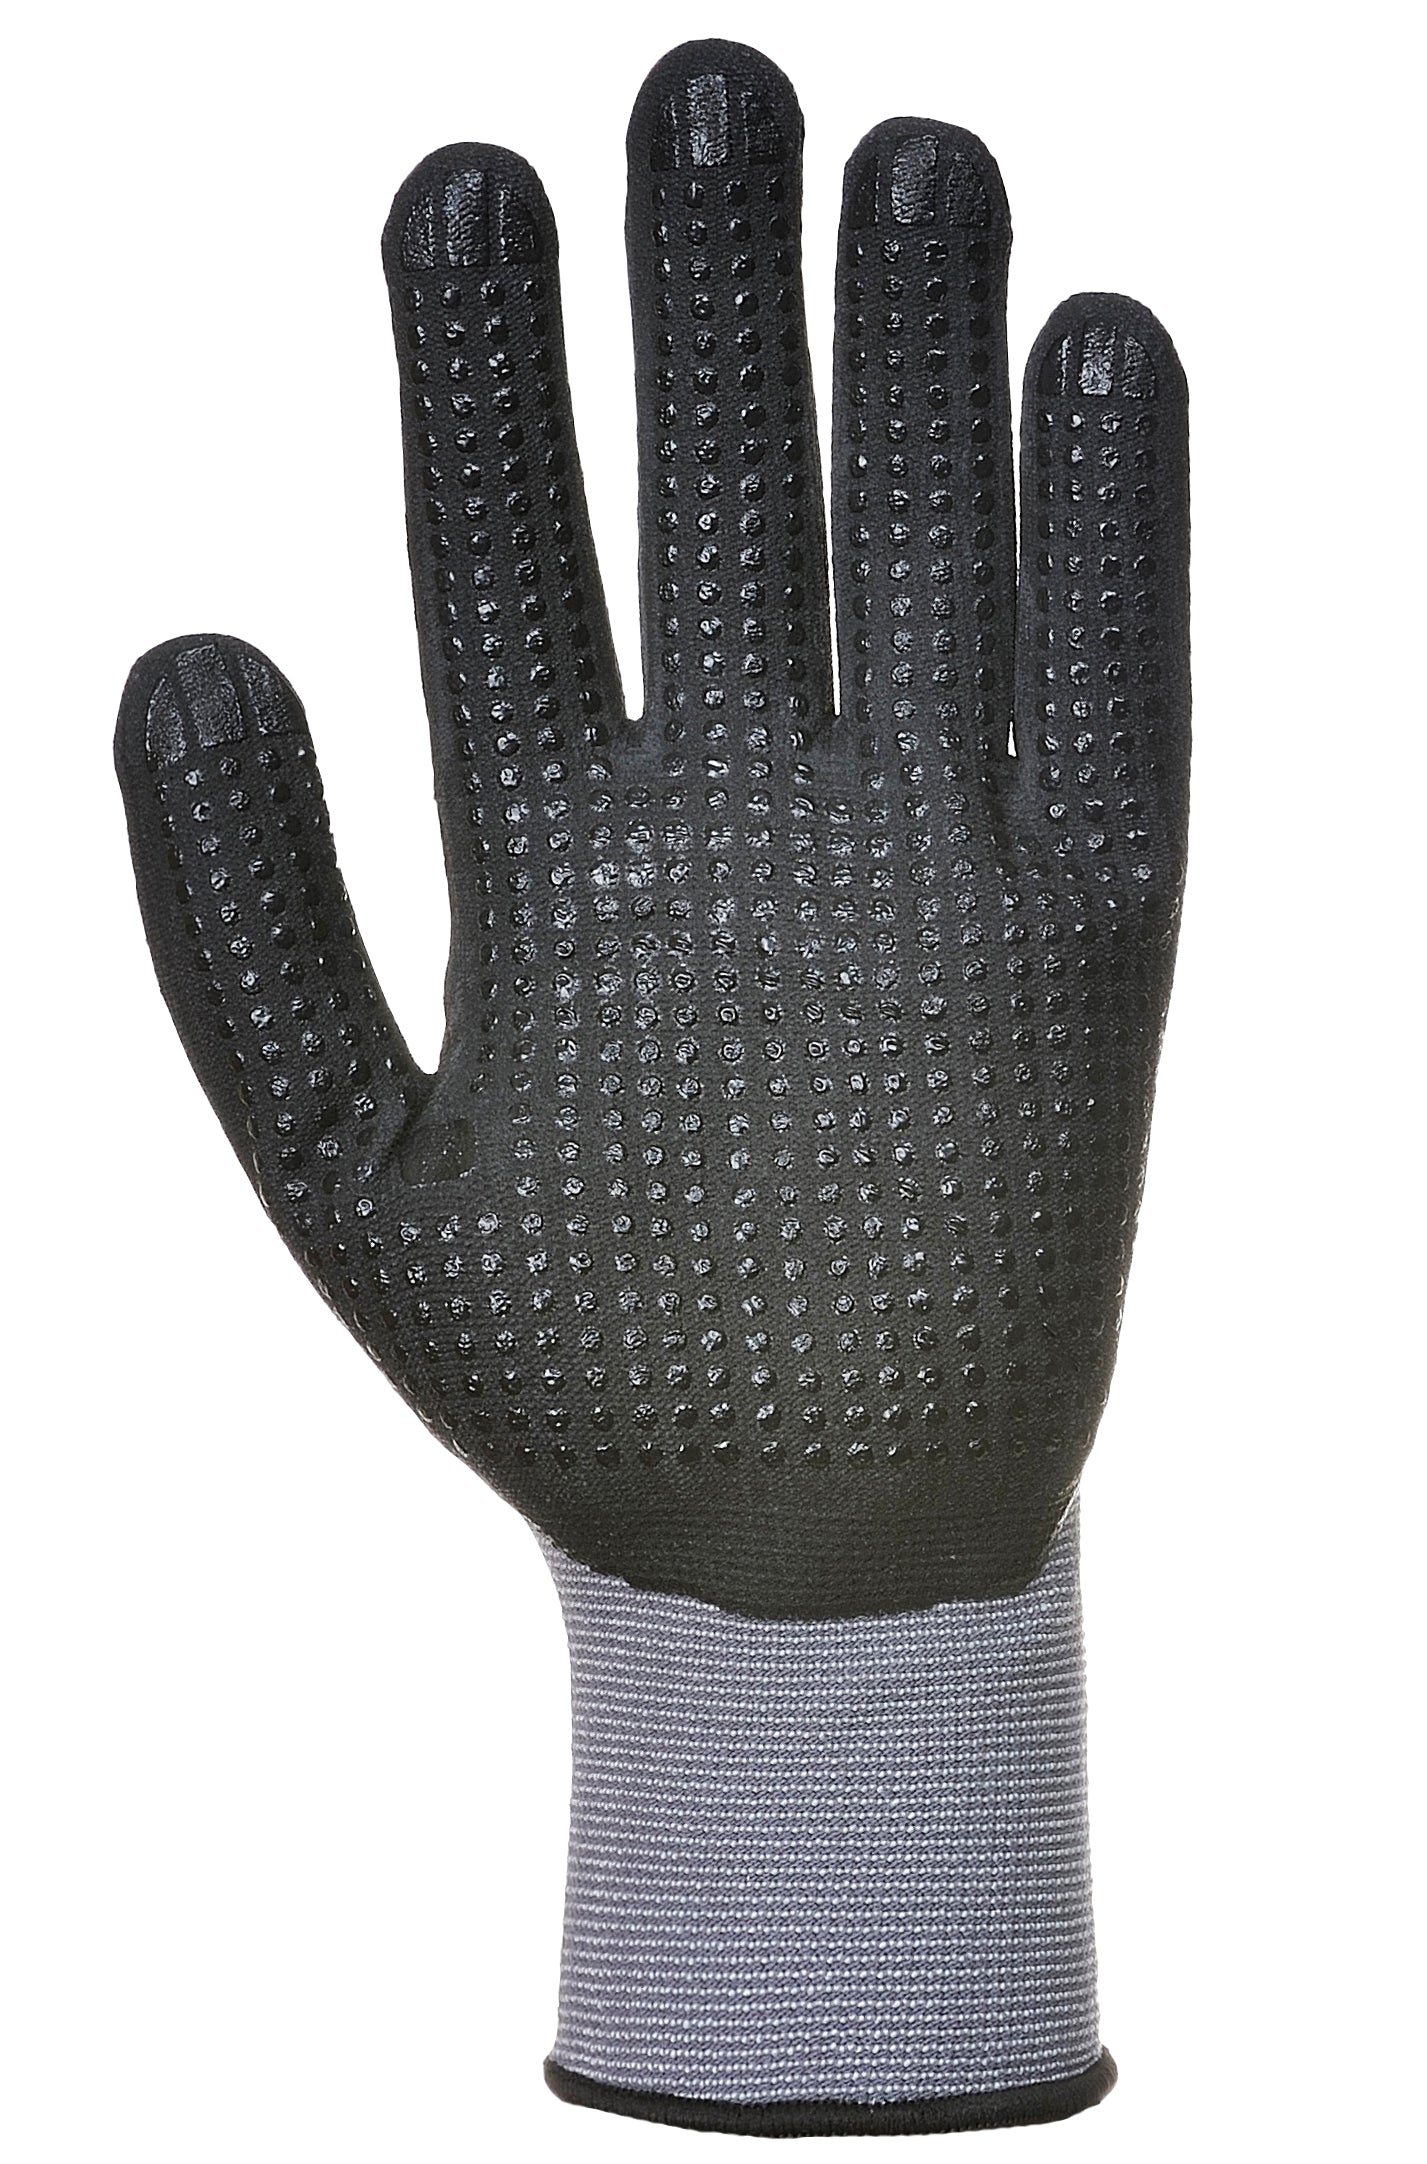 Dermiflex Plus Glove Grey/Black - A351 Palm